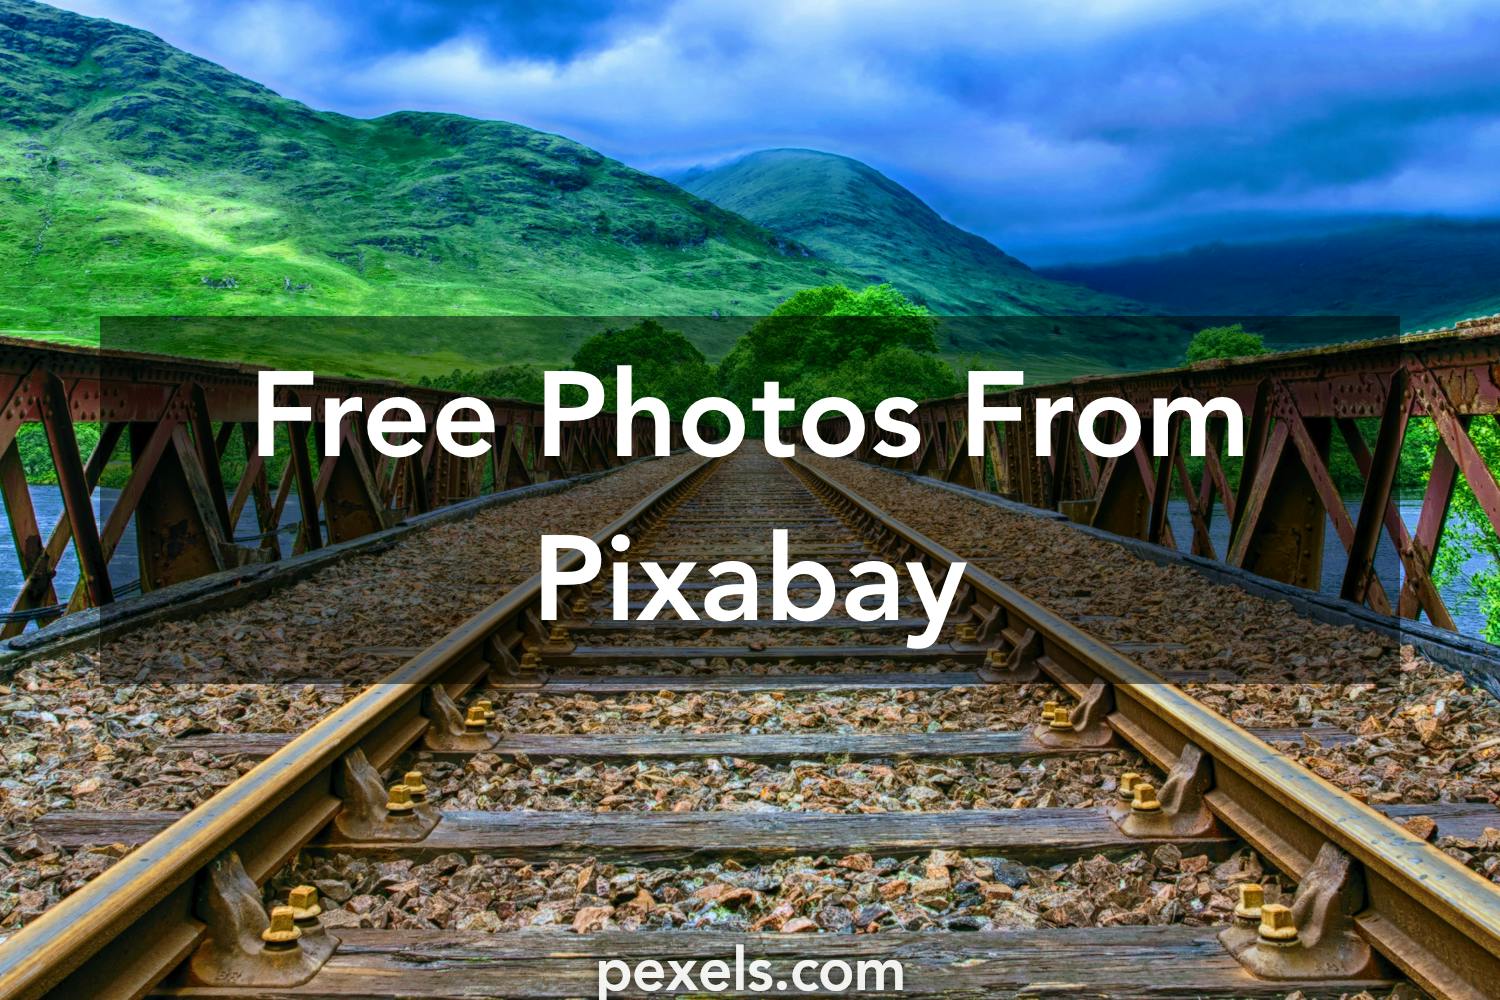  Pixabay  Photography